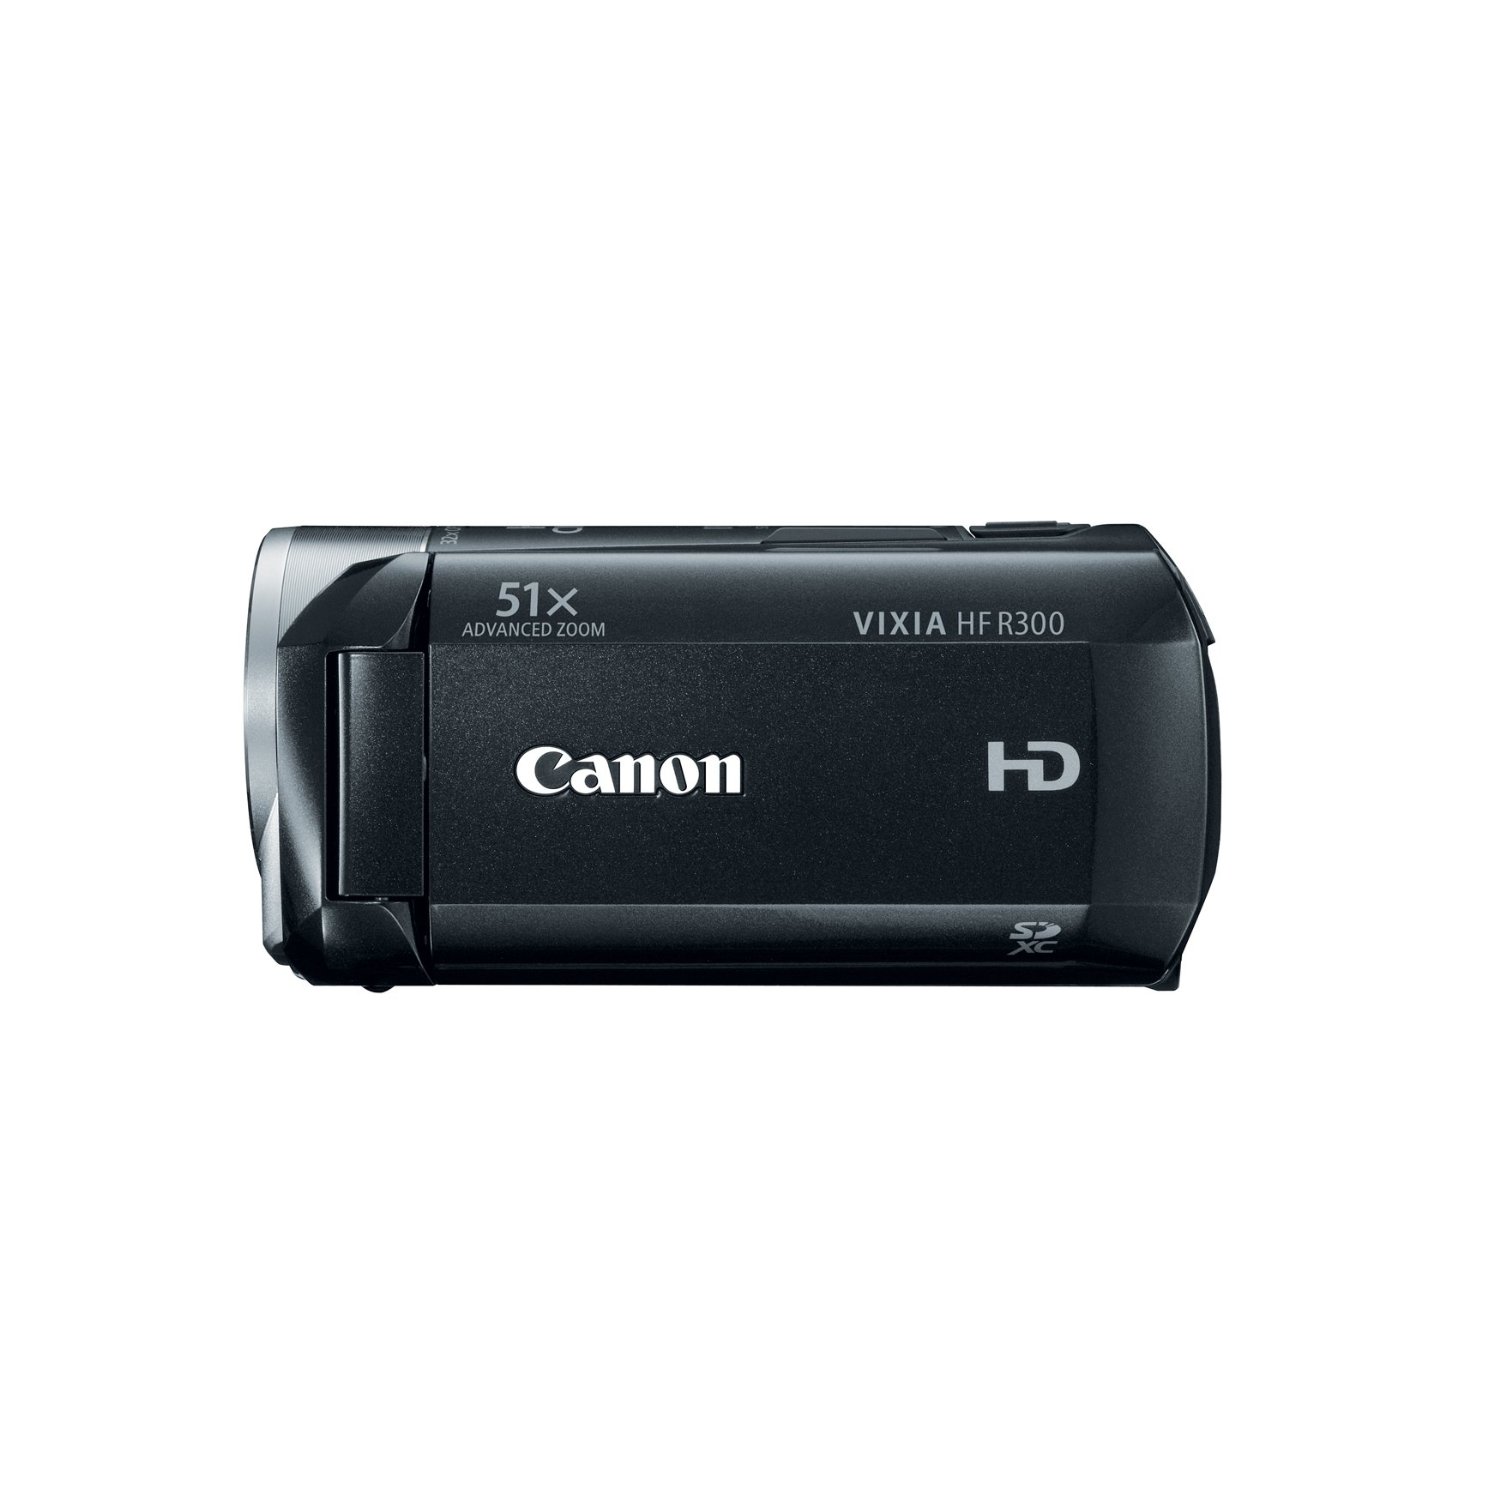 canon vixia hf r300 full hd camcorder manual